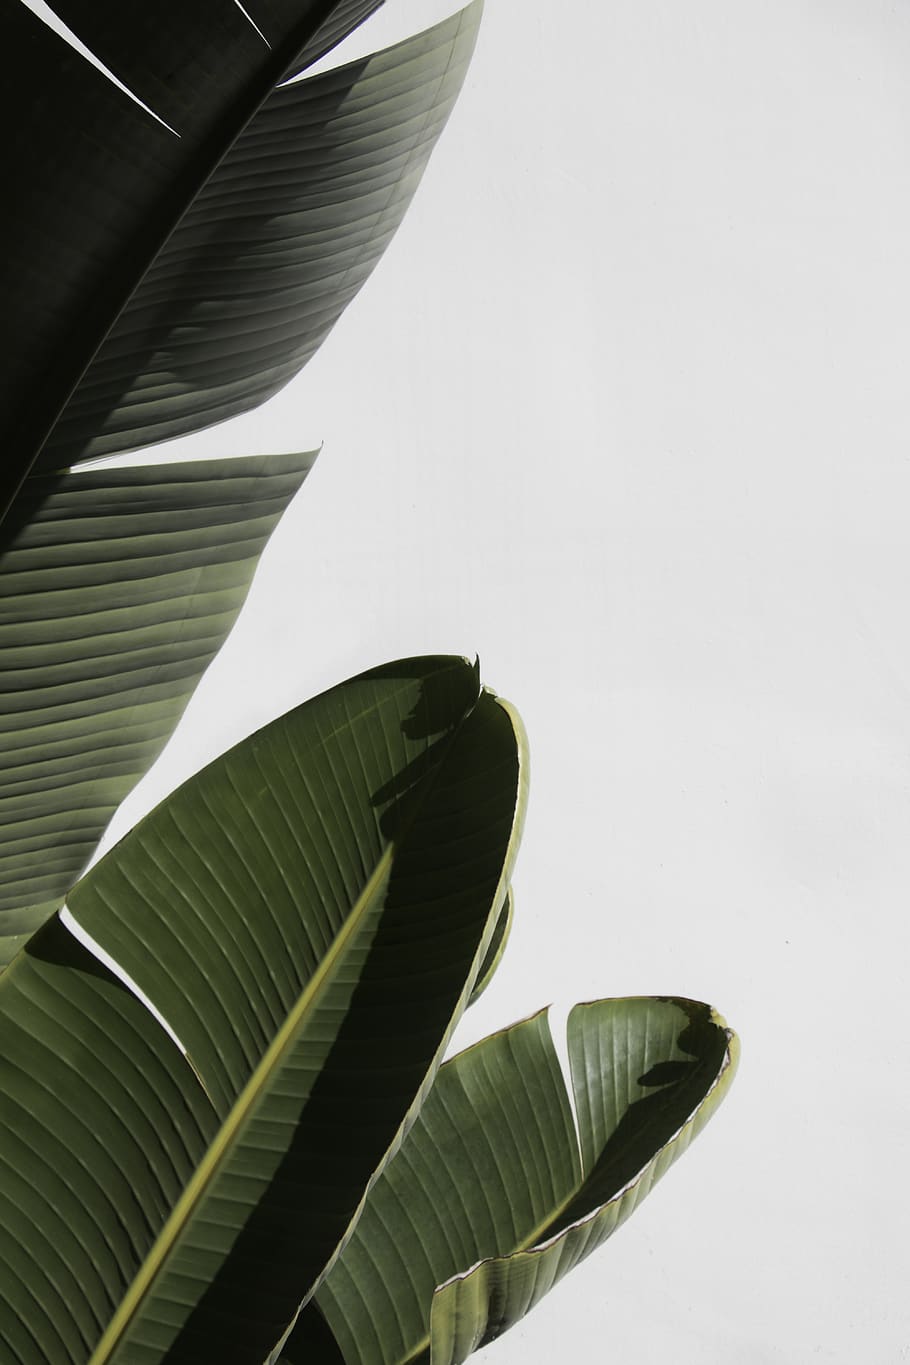 Banana Leaf Plant Wallpaper - werohmedia